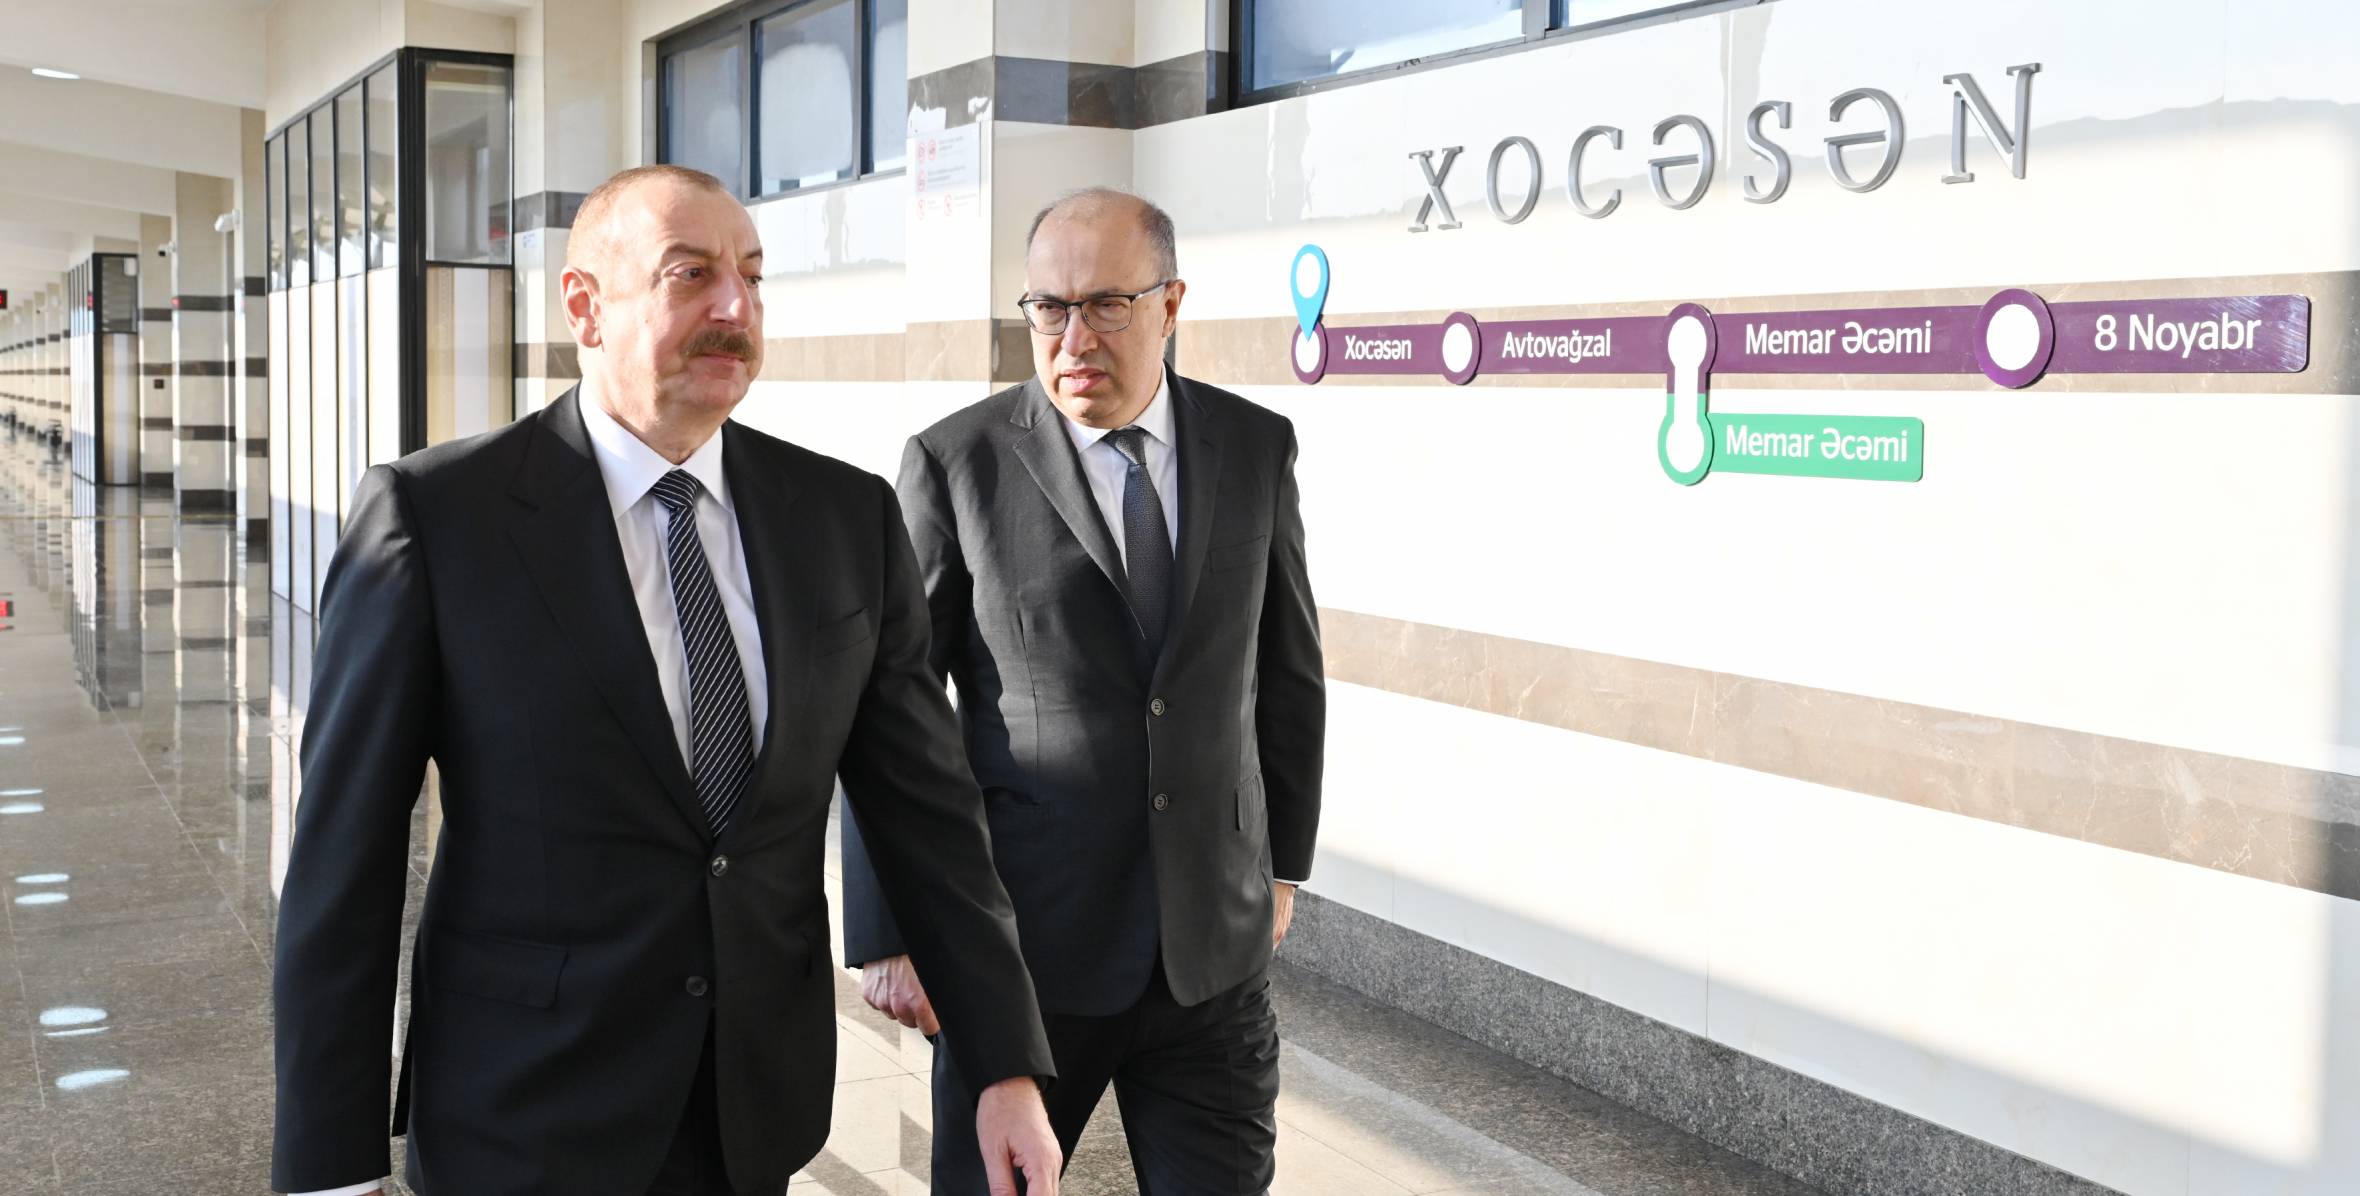 Ilham Aliyev attended opening of “Khojasan” station and electric depot of Baku Metro